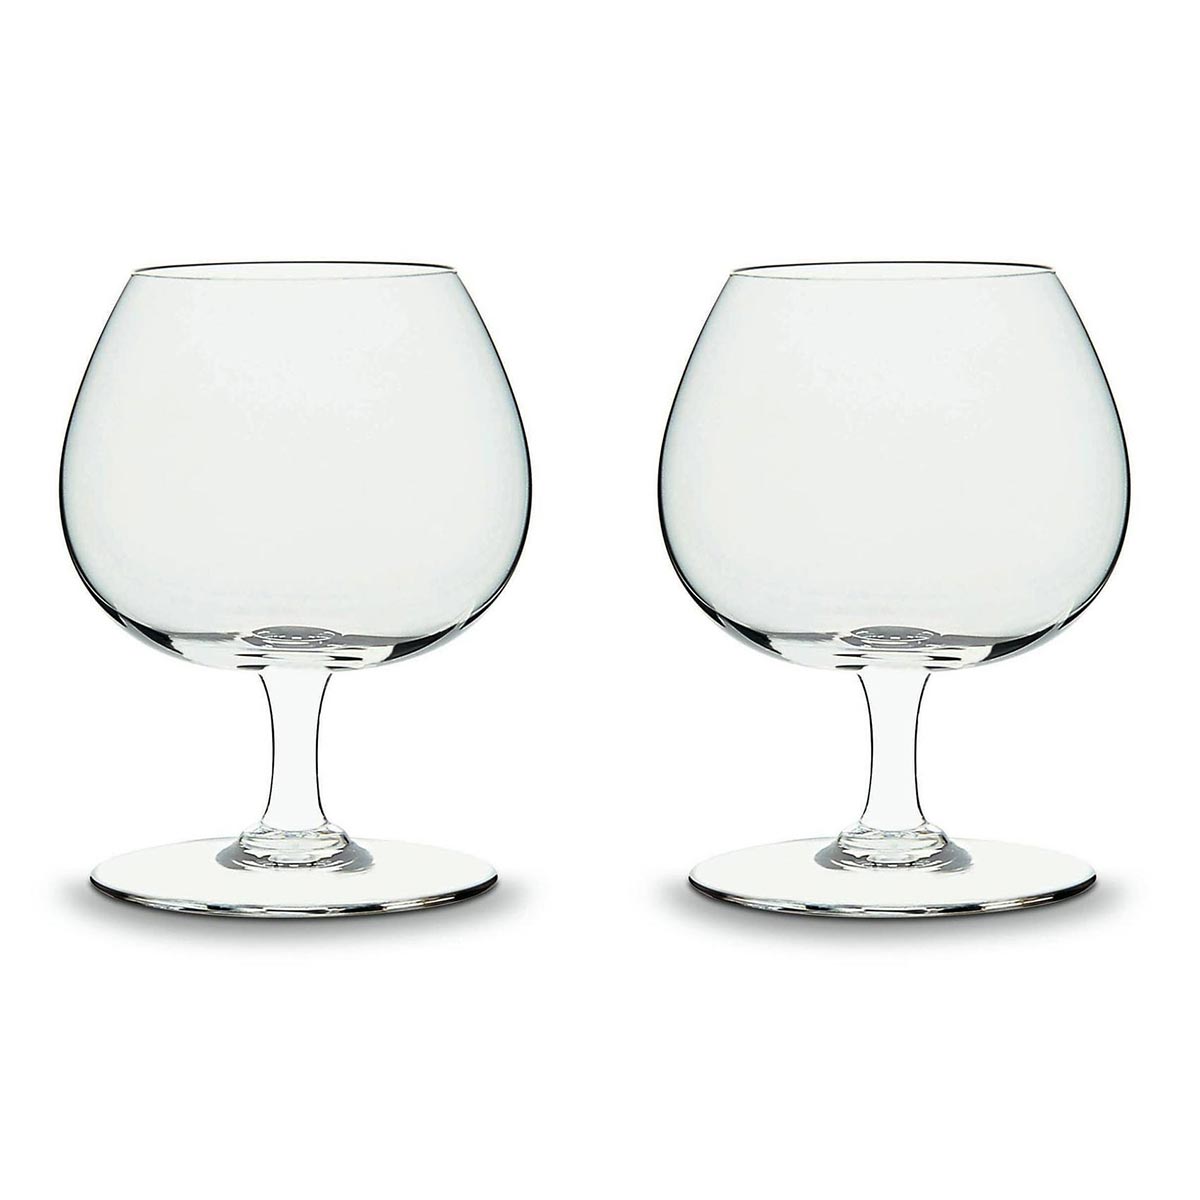 Set of 2 cognac glasses